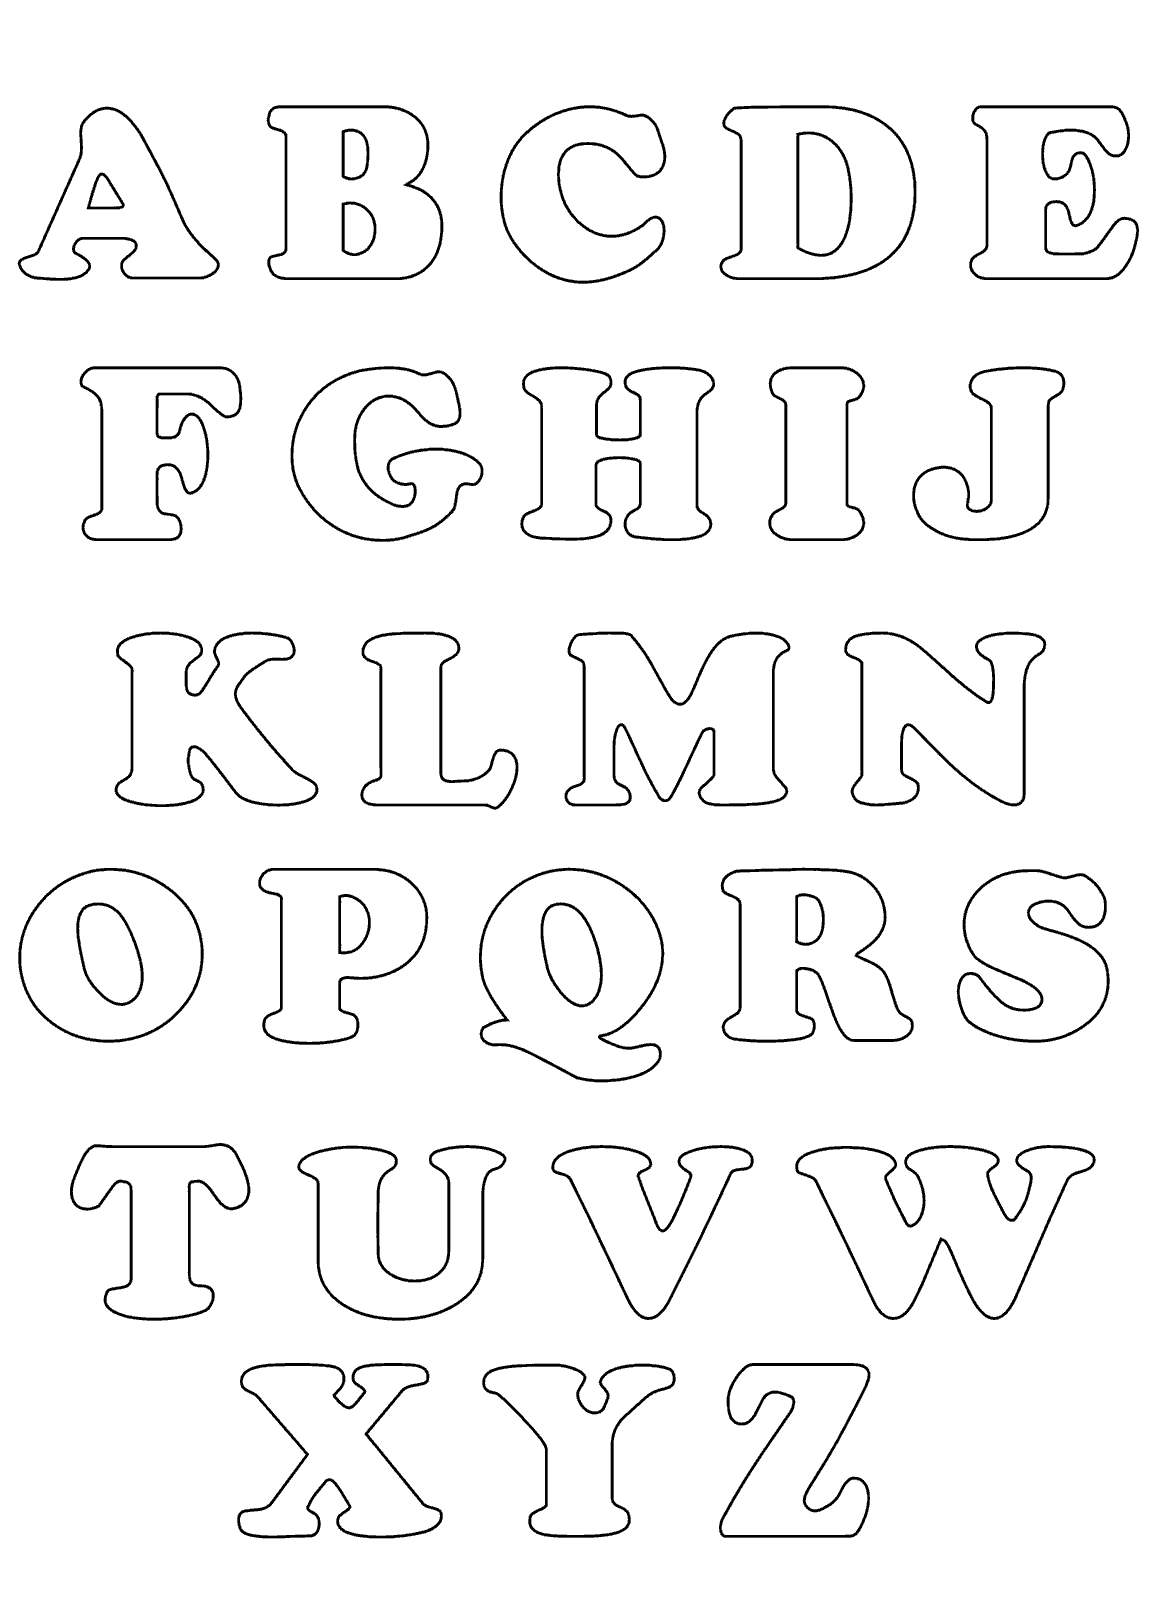 Recortar Abecedario Moldes De Letras Para Imprimir / Moldes de letras